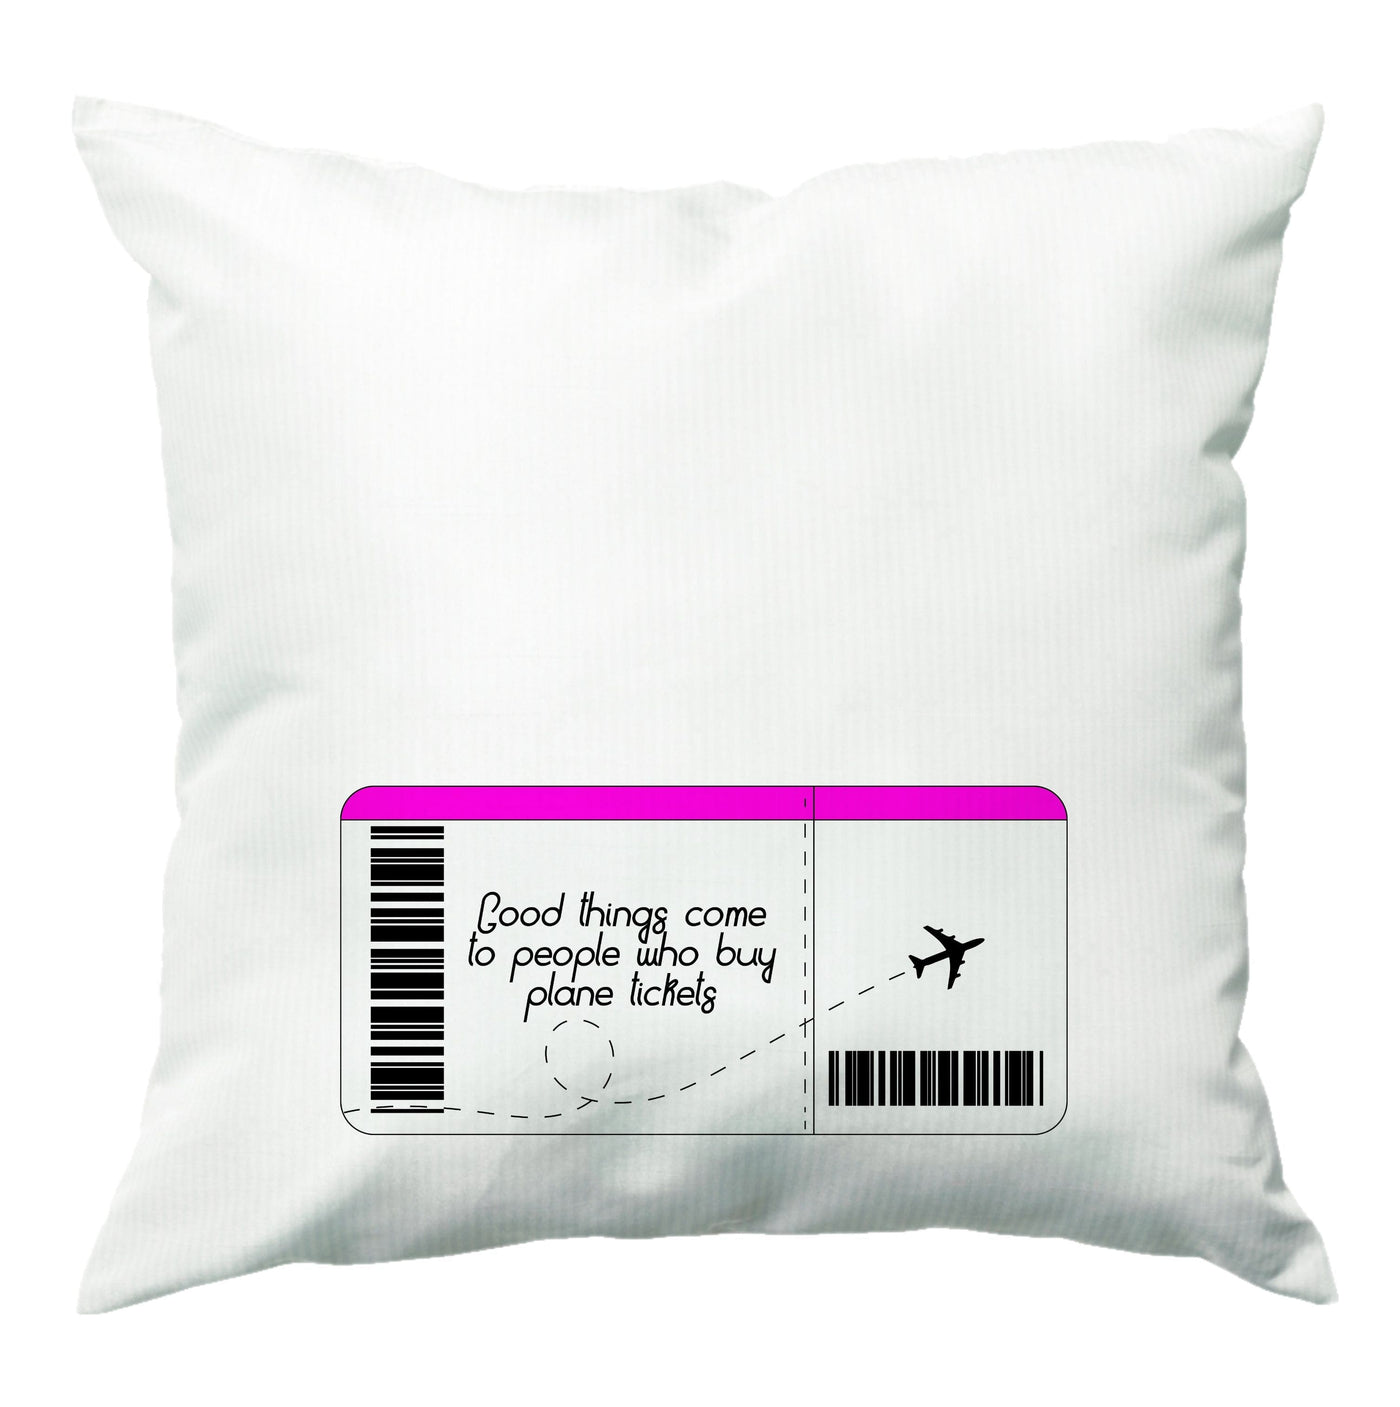 Buy Plane Tickets - Travel Cushion